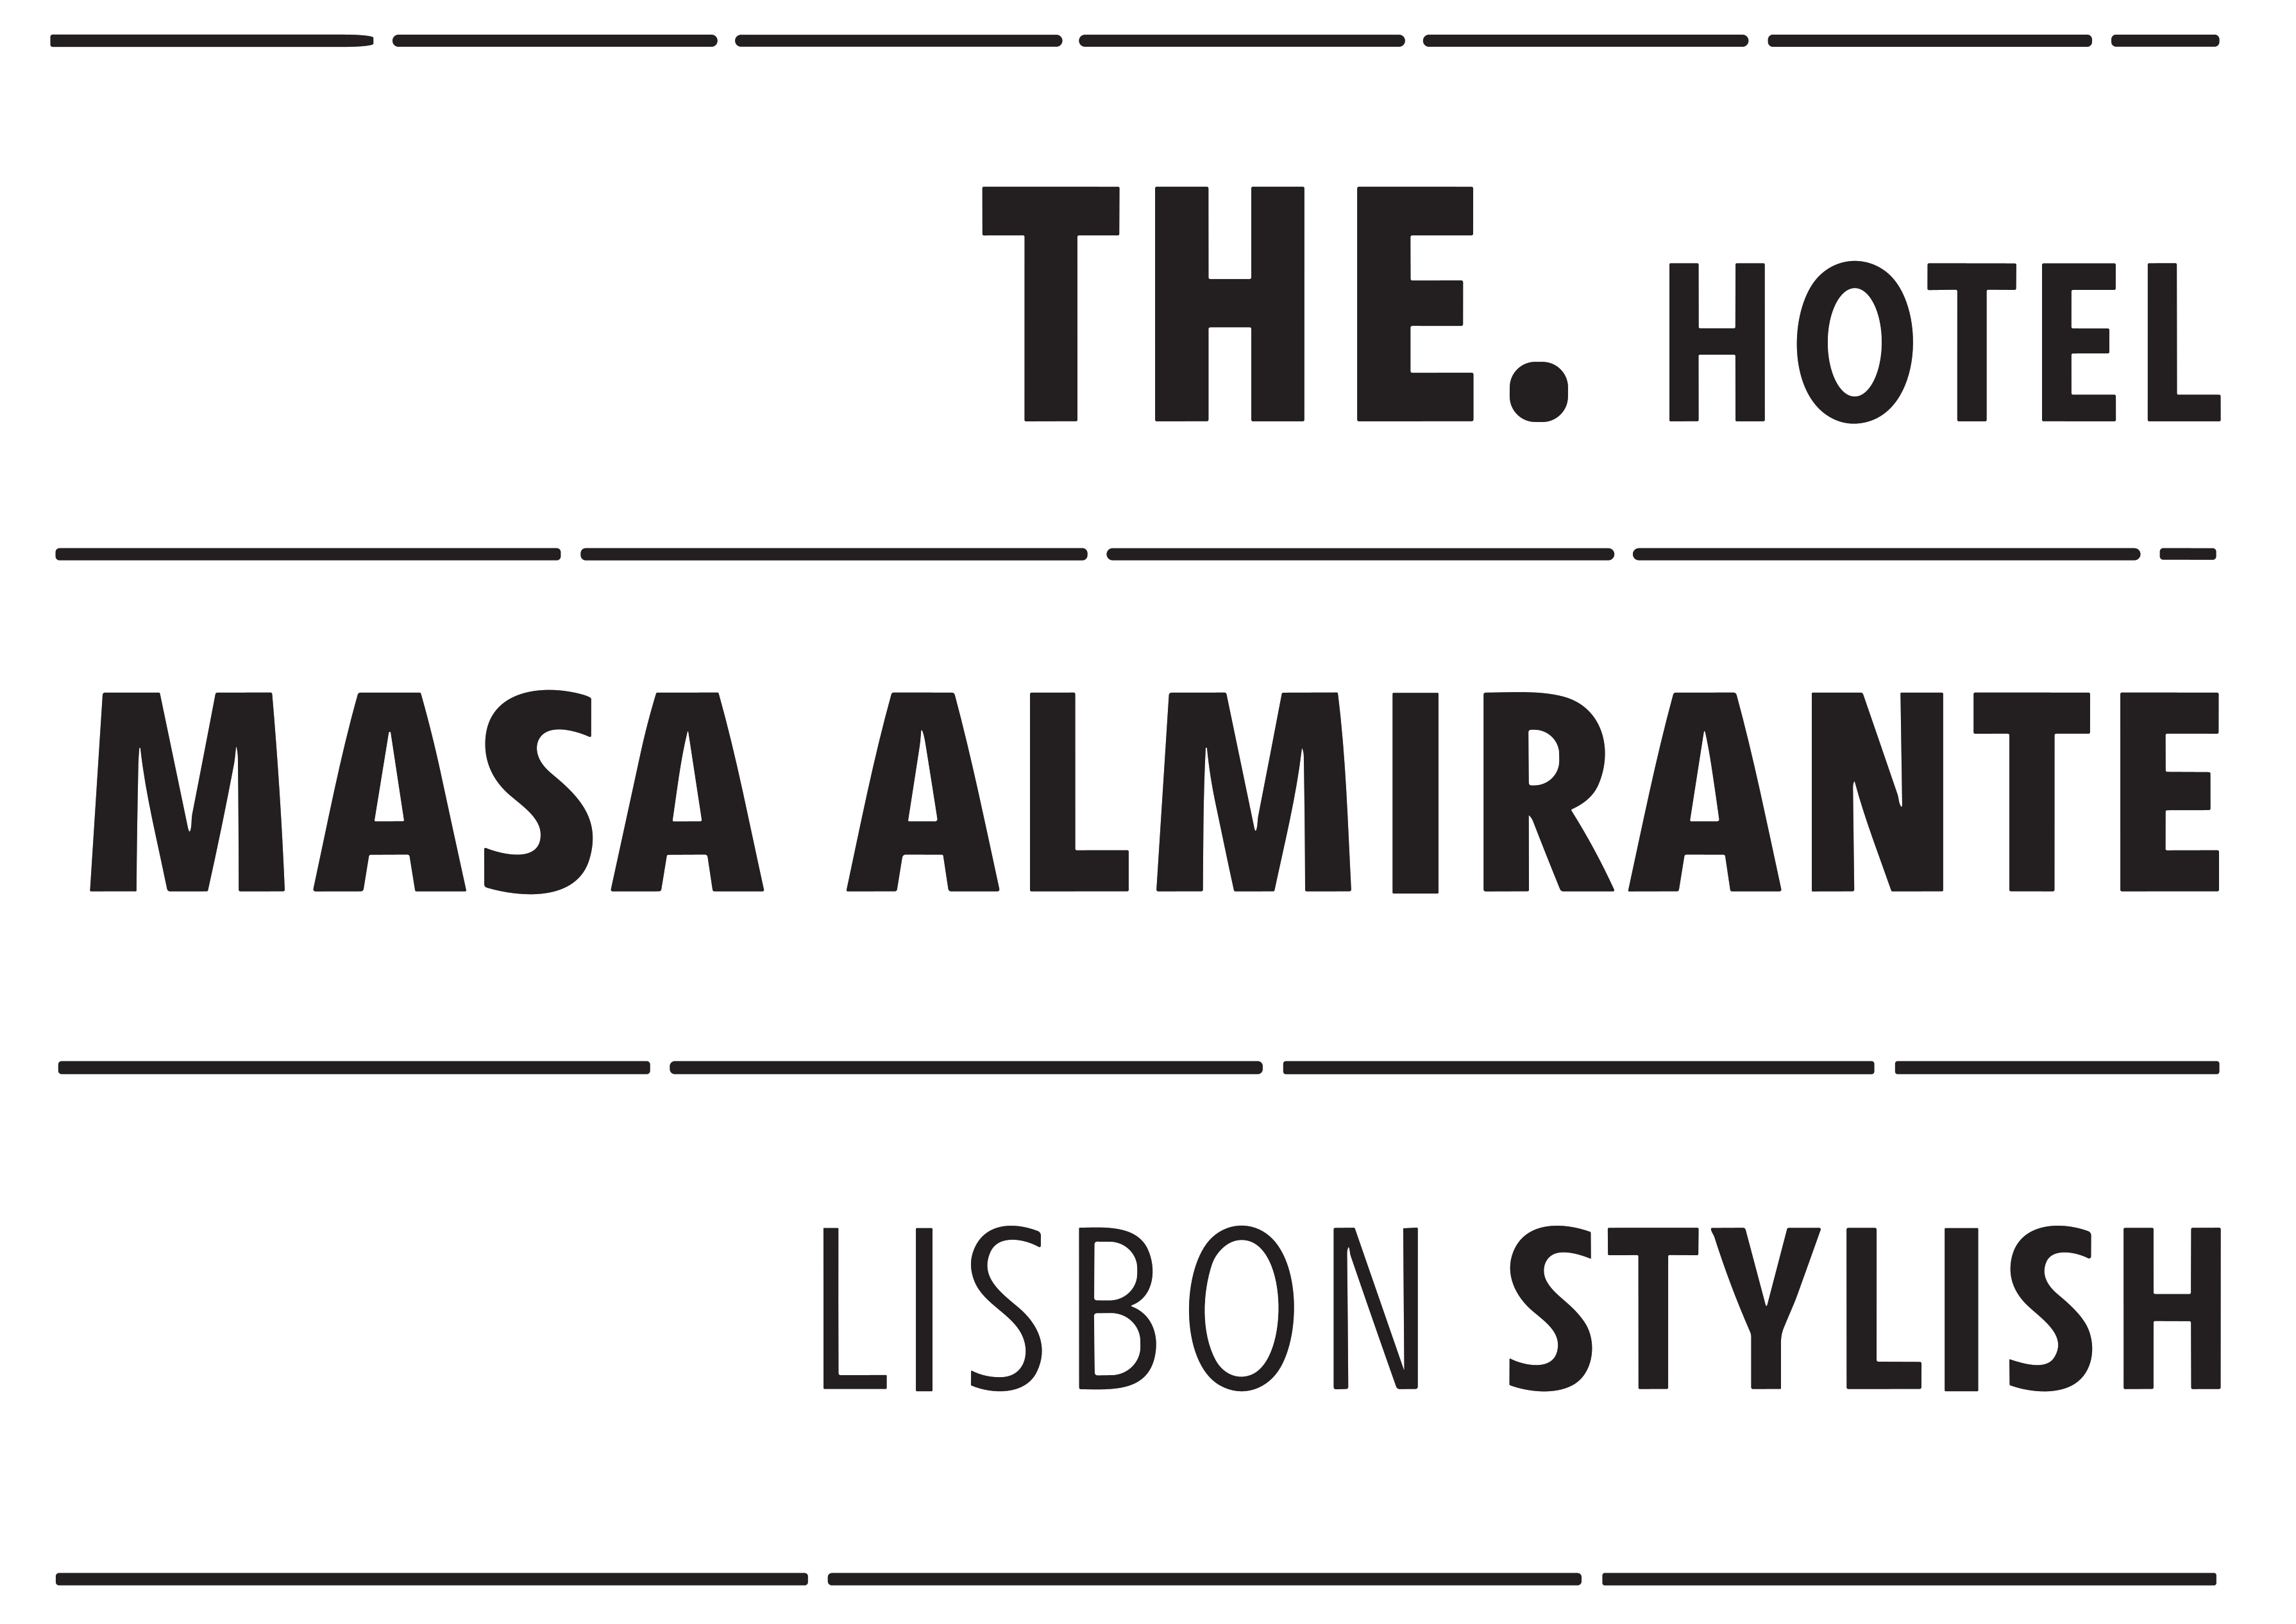 The Hotel Masa Almirante Lisbon Stylish 